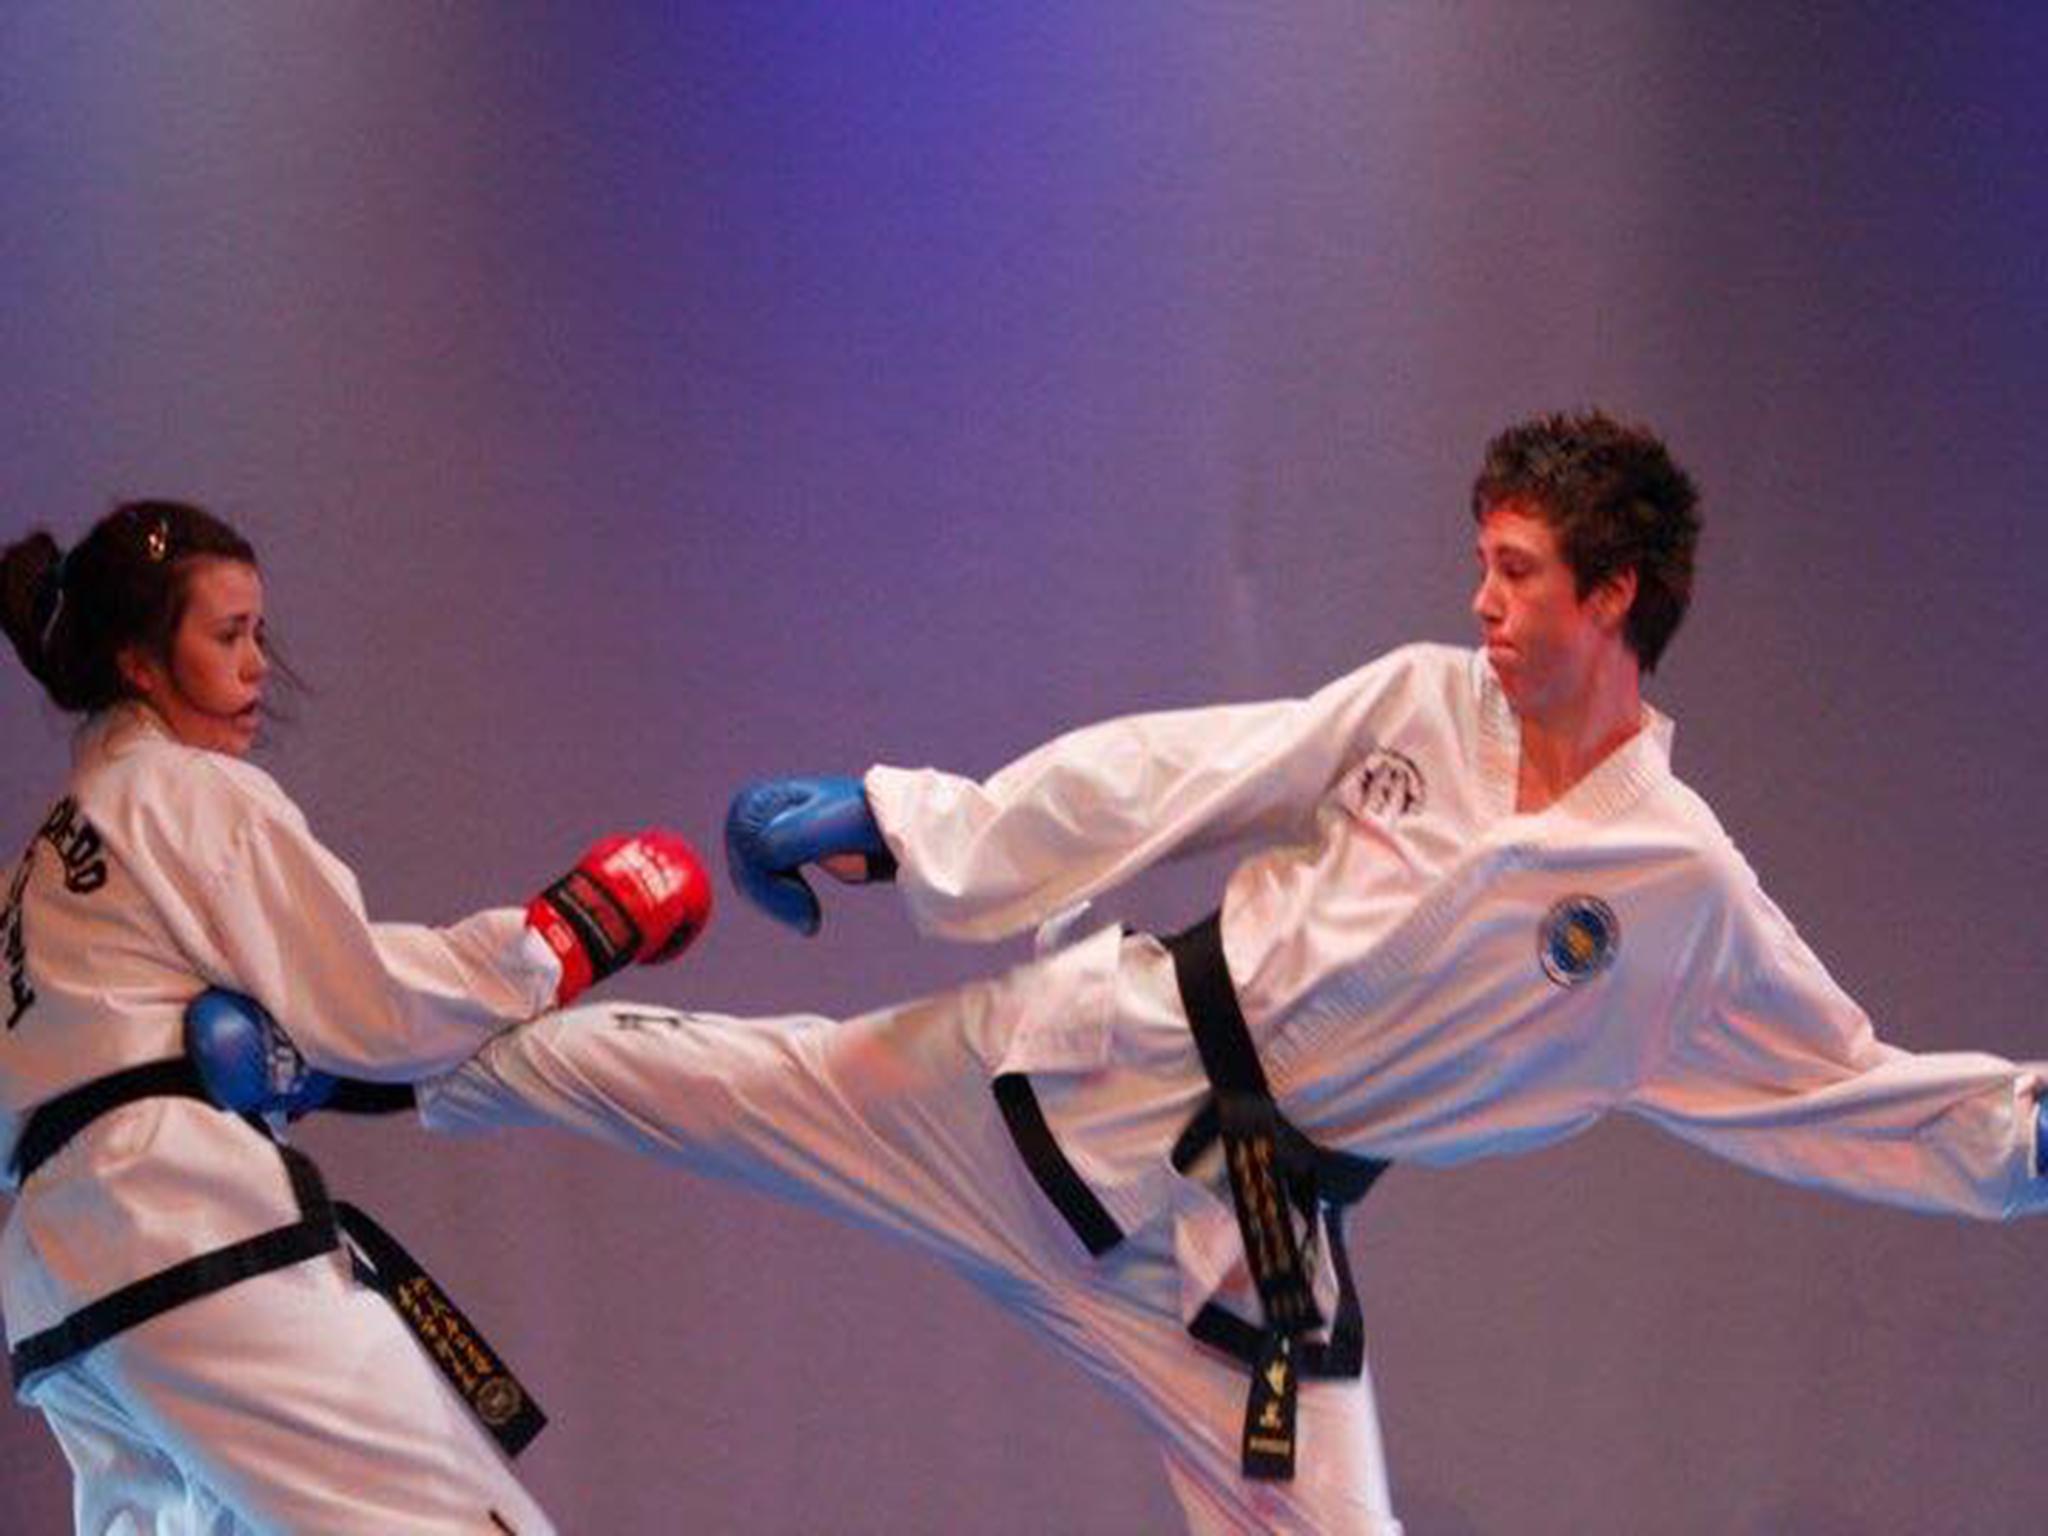 Jack was British Taekwondo Champion and won over 50 gold medals